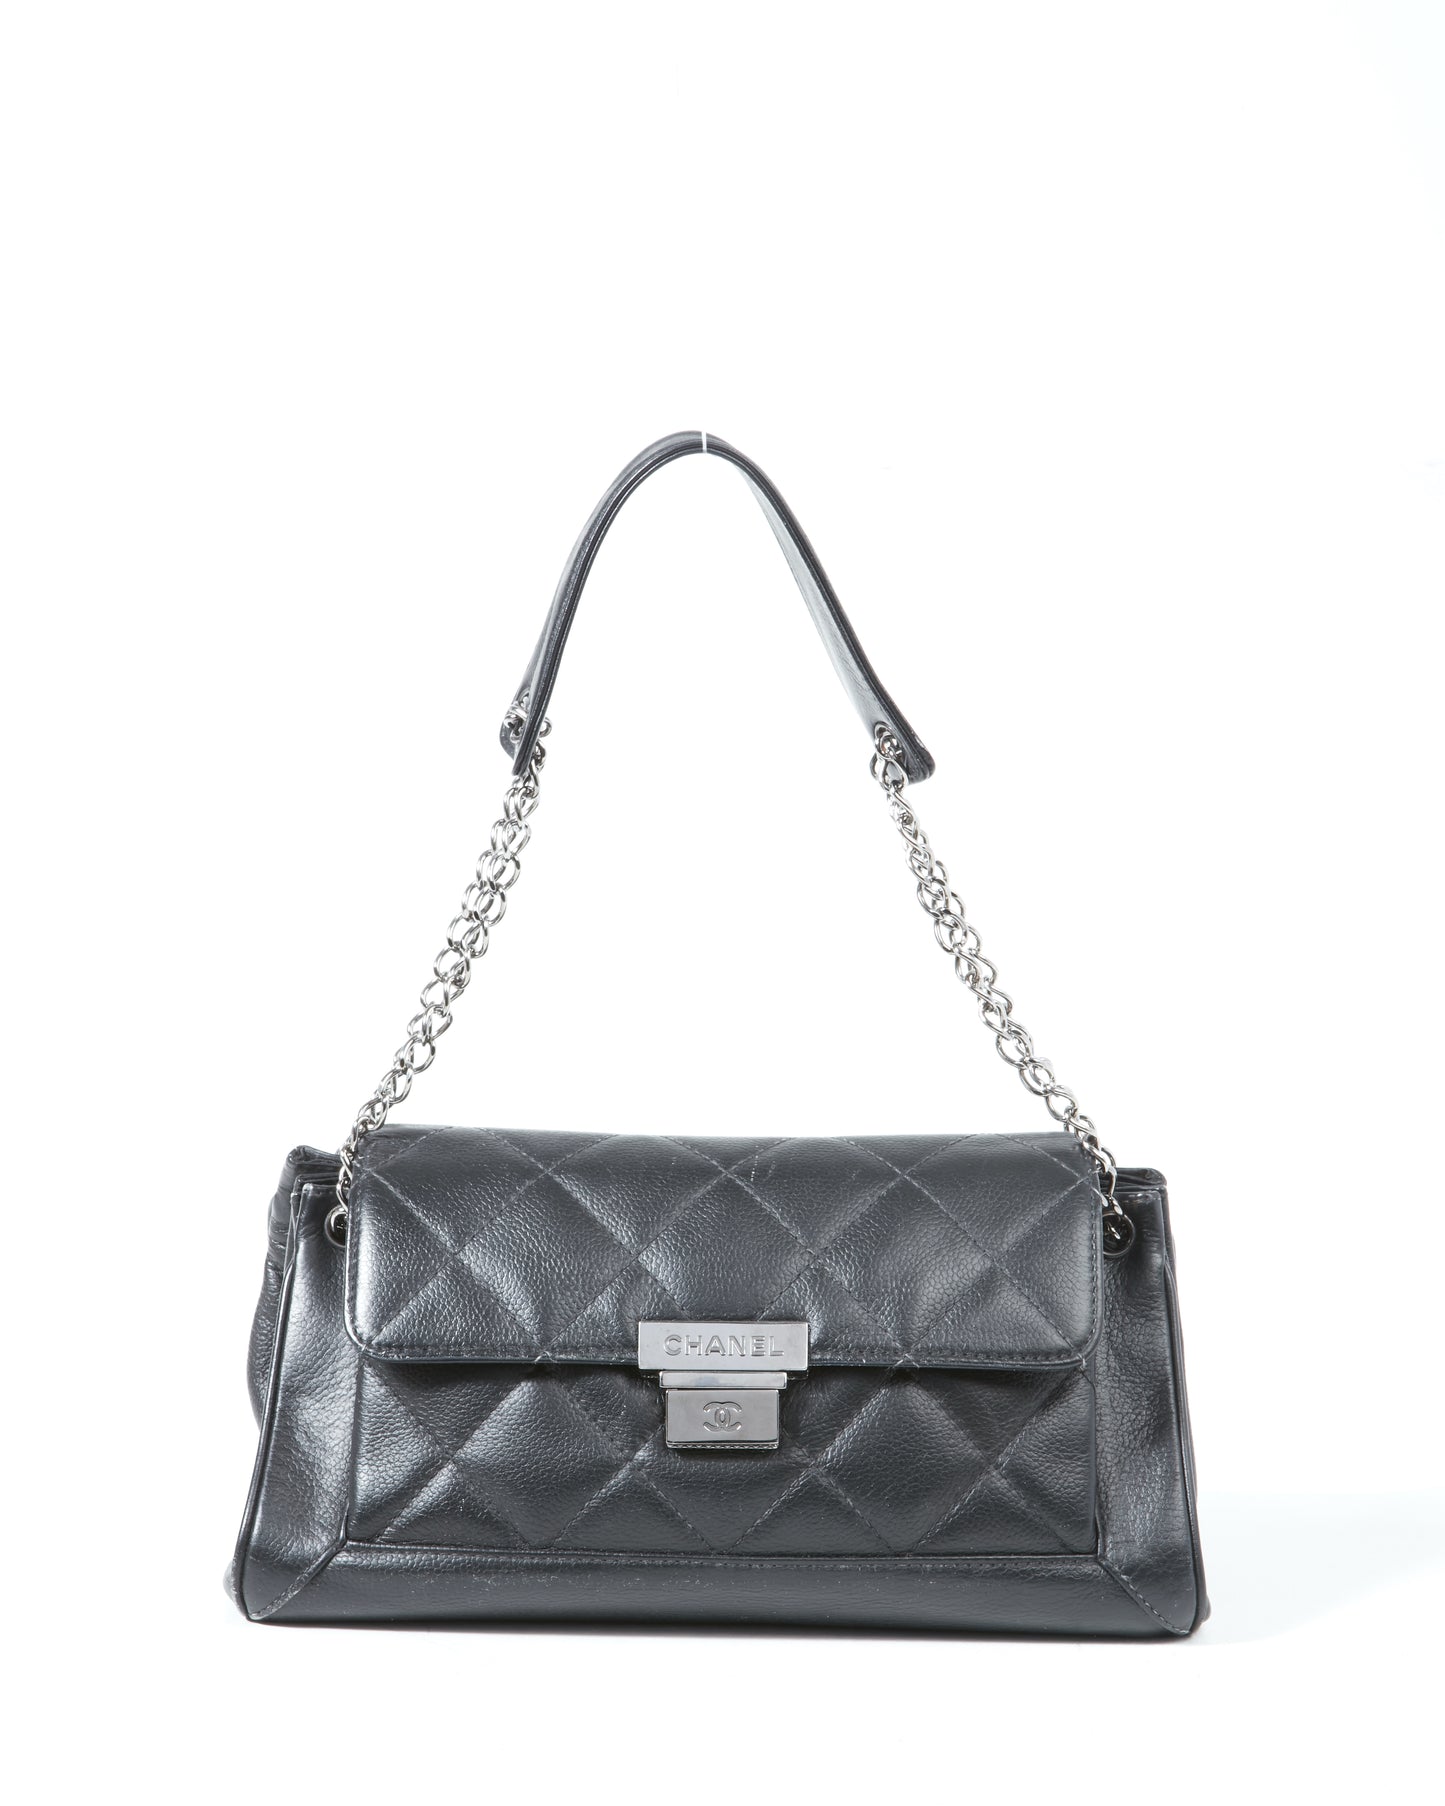 Chanel Black Caviar Leather 2003 Small Shoulder Bag